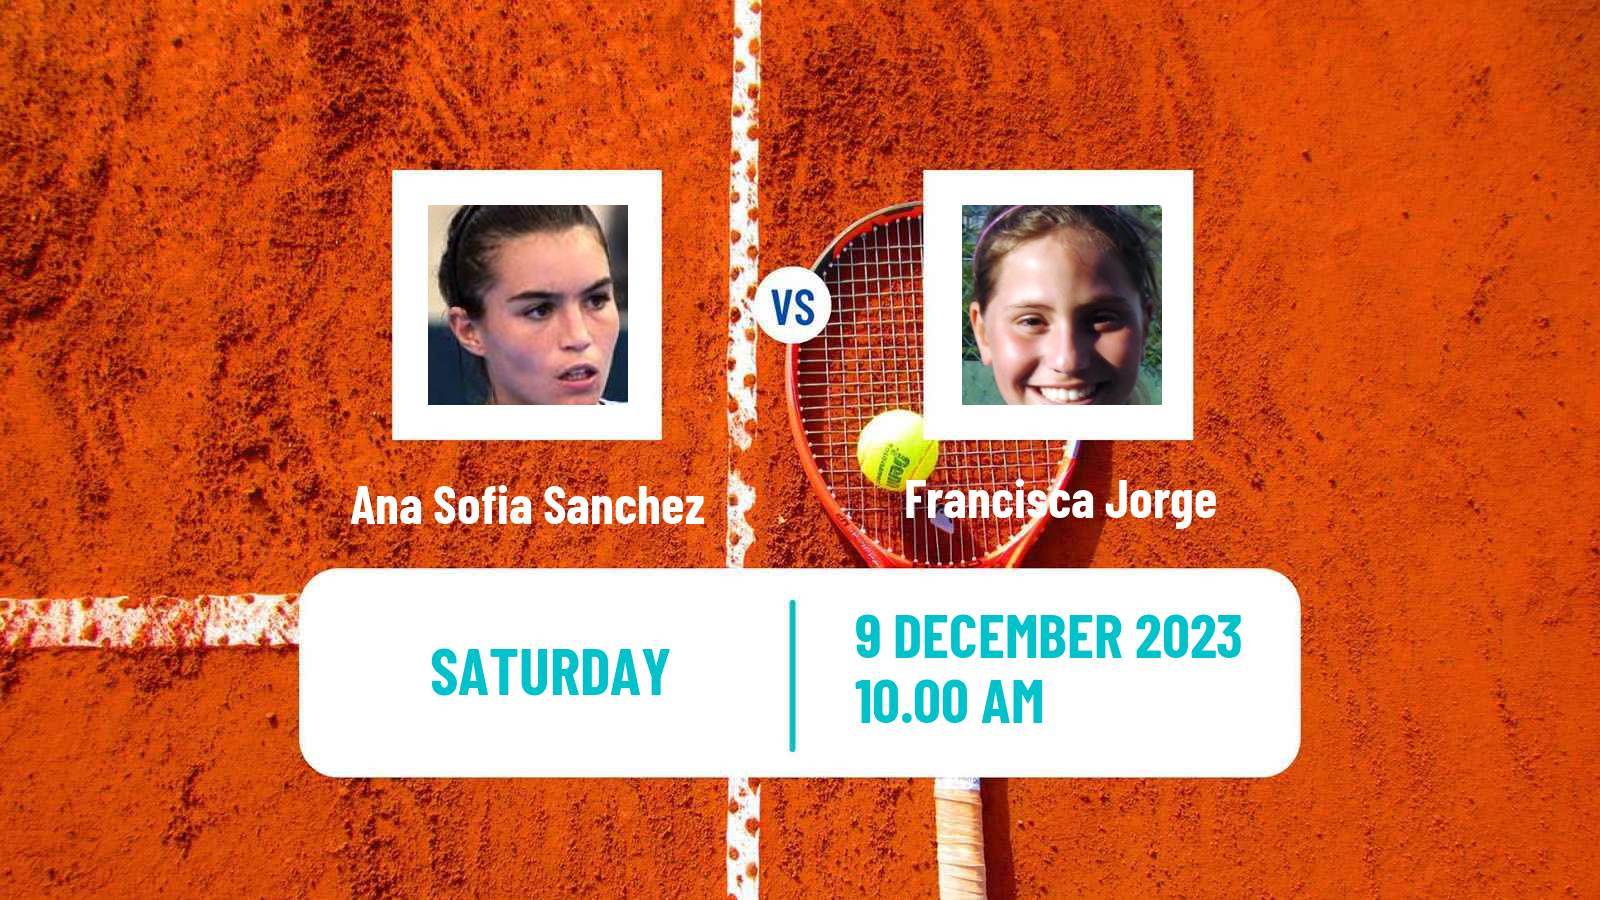 Tennis ITF W25 Mogi Das Cruzes Women Ana Sofia Sanchez - Francisca Jorge